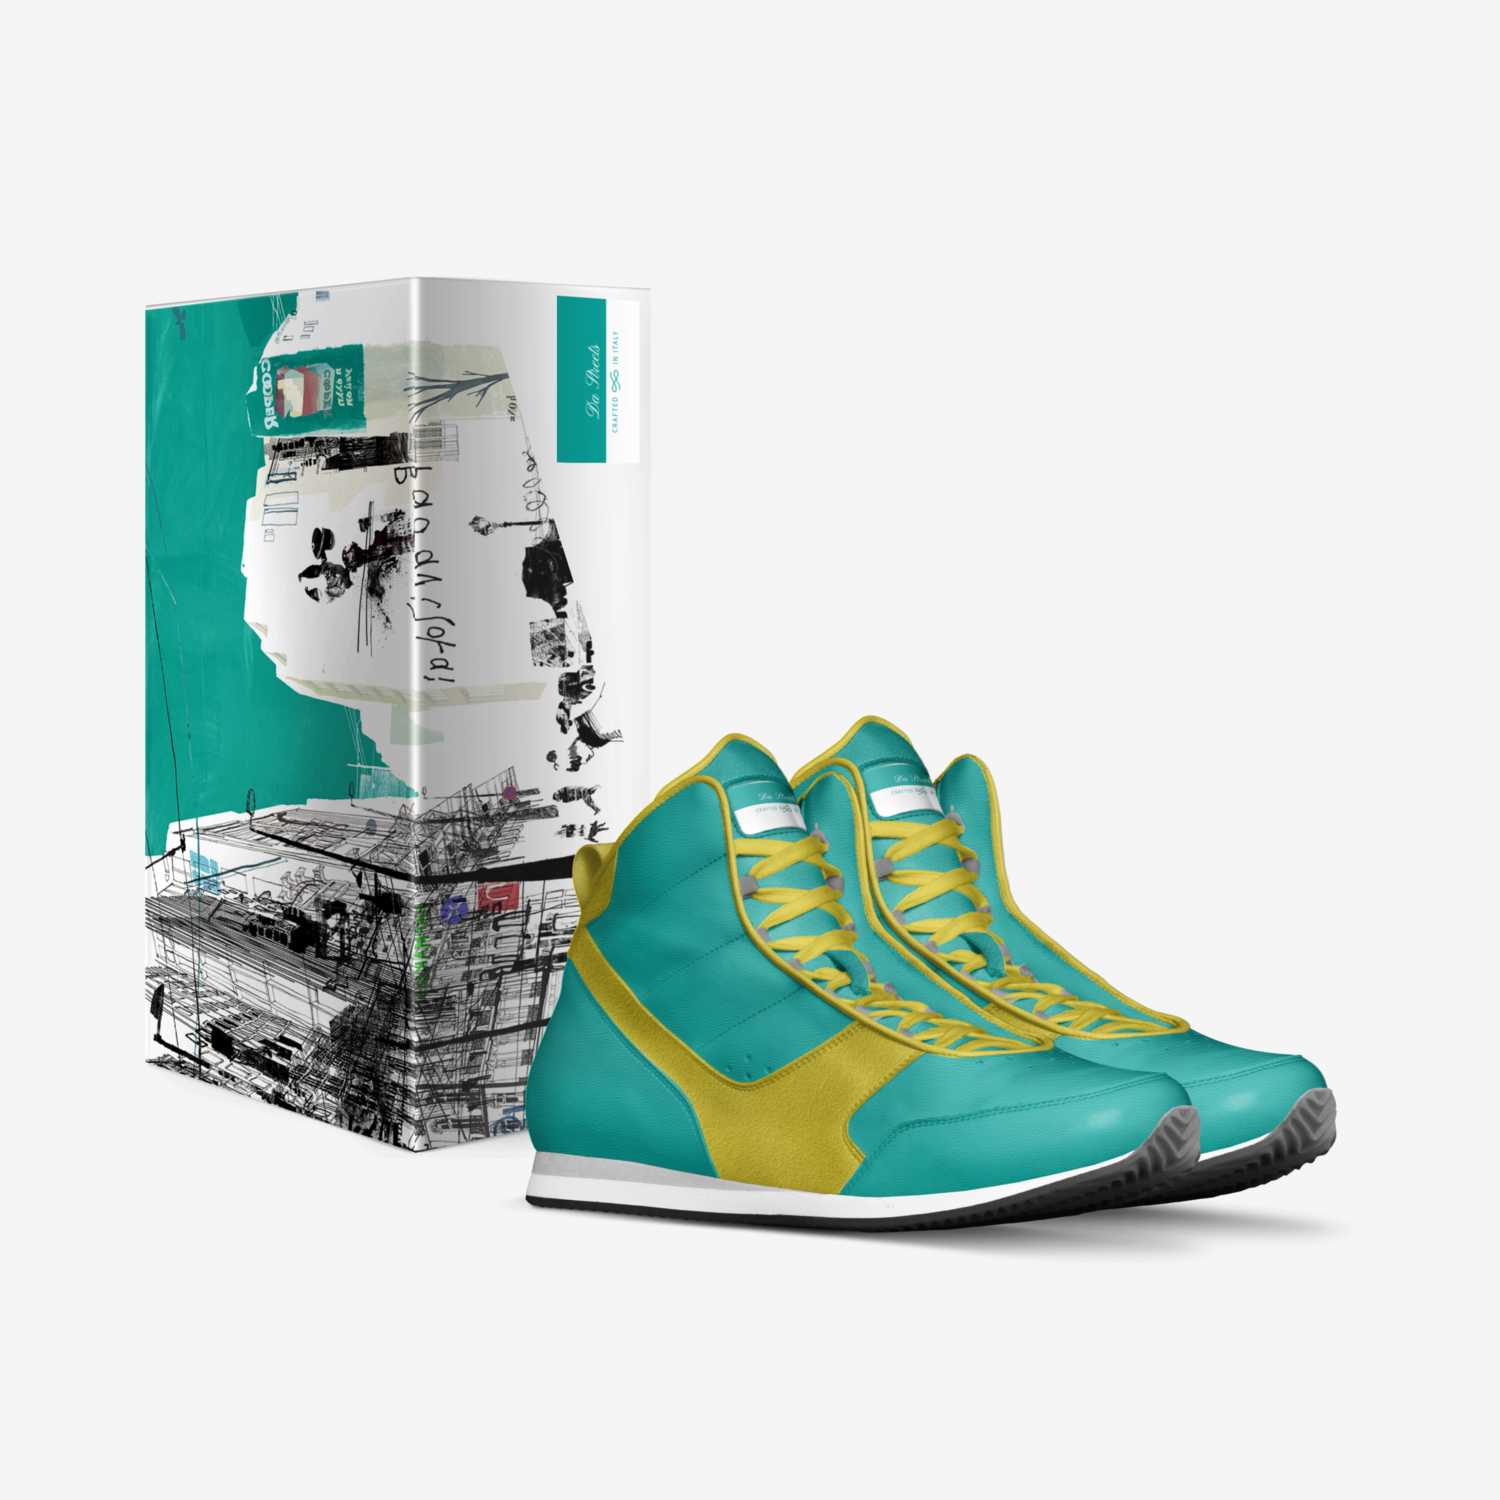 Da Streets custom made in Italy shoes by Govinda Tselios | Box view